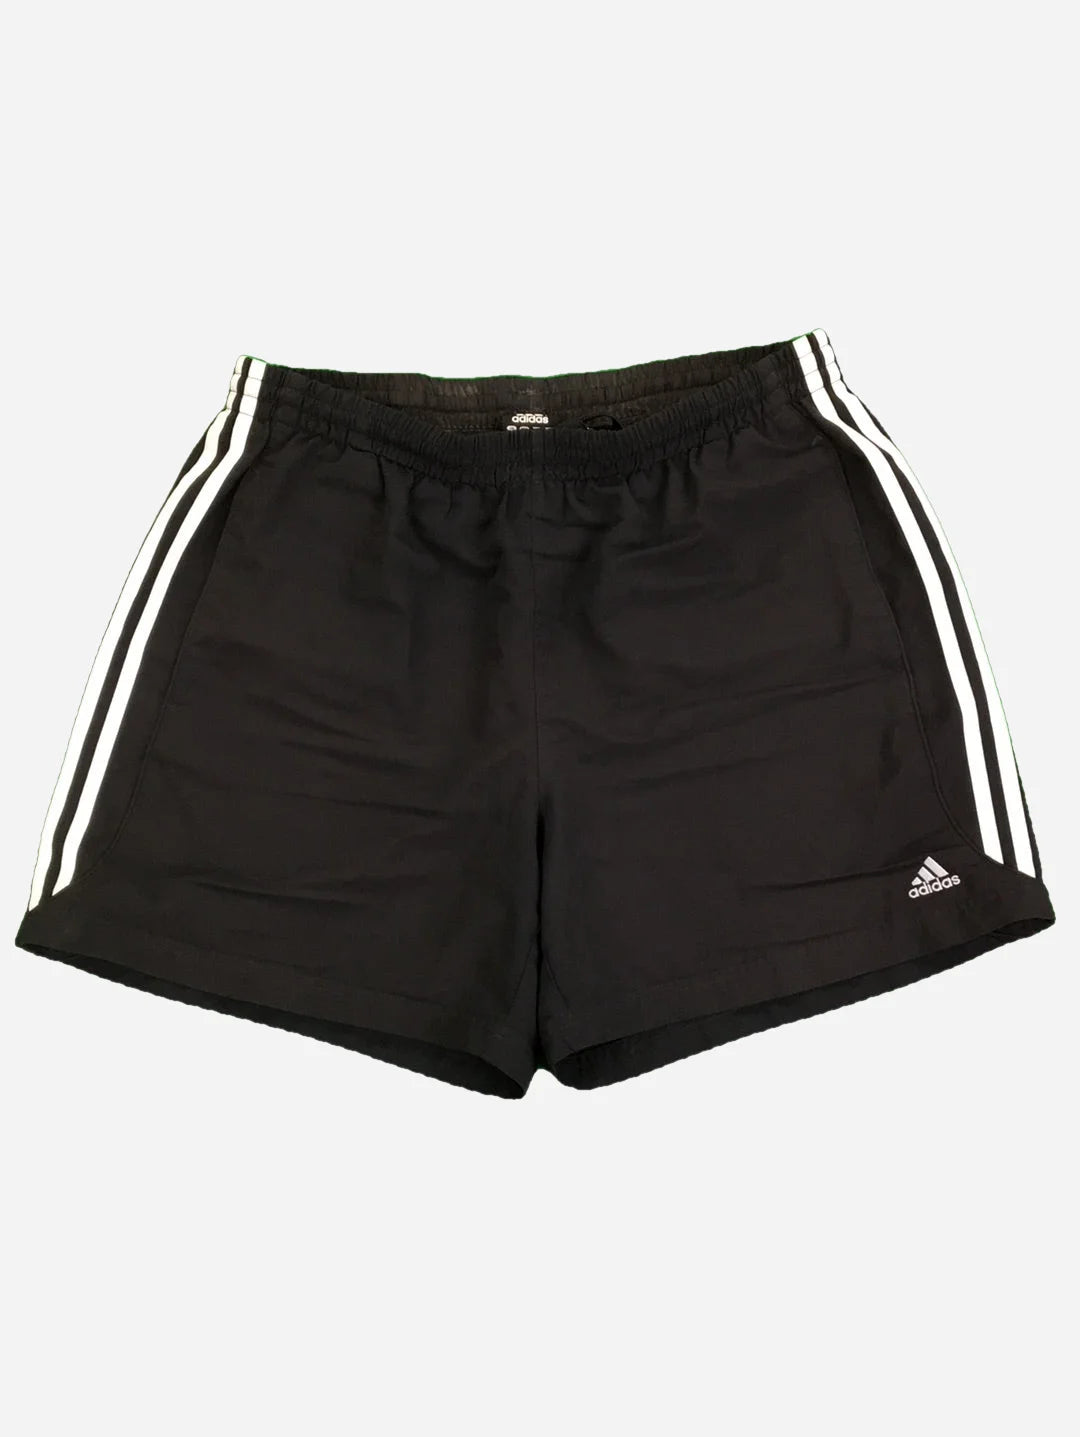 Adidas Shorts (XL)